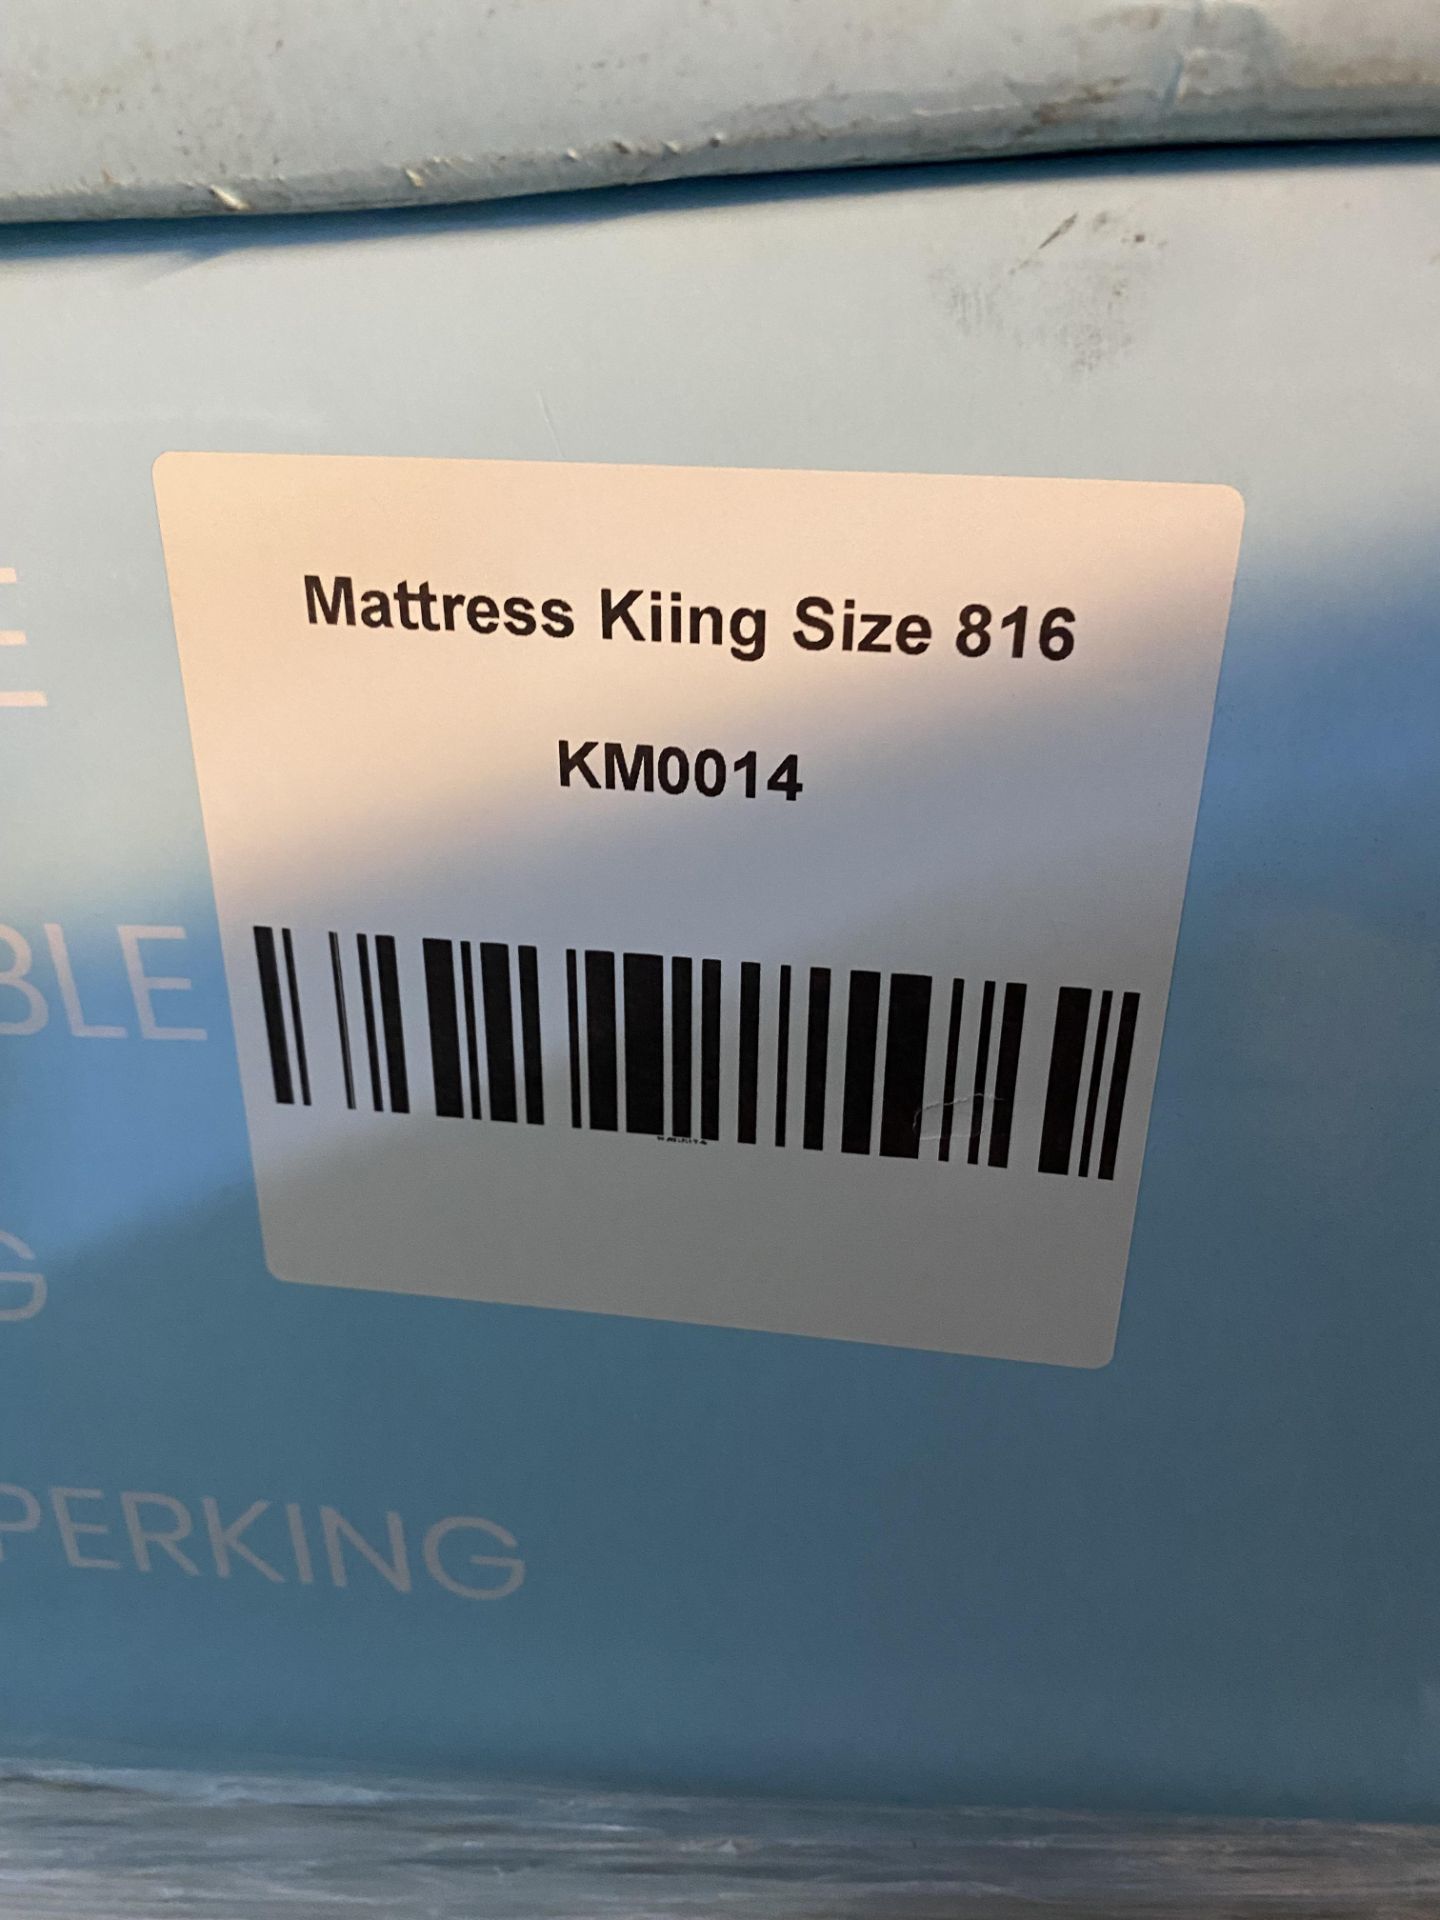 ComfaSleep KM0014 King Size 816 Mattress - Image 11 of 11